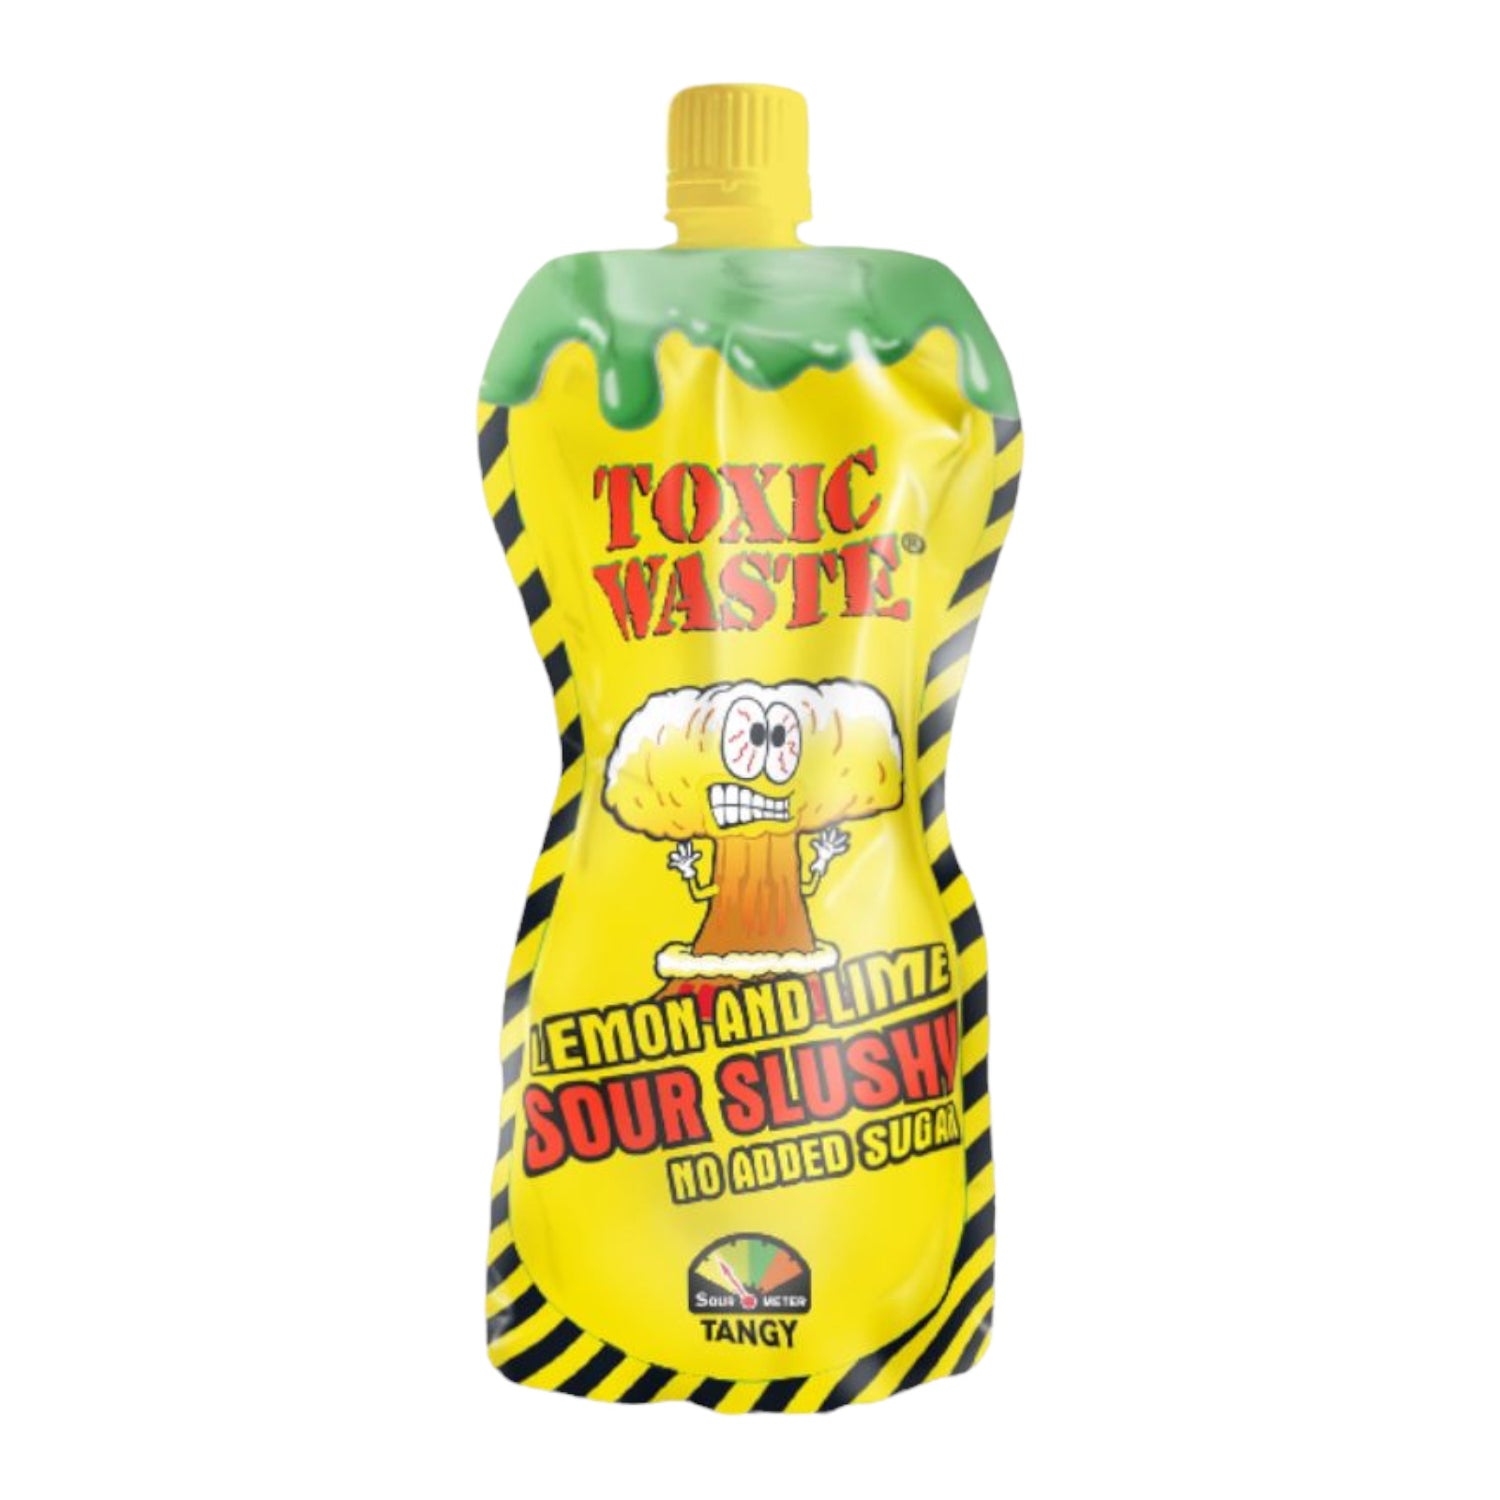 Toxic Waste Lemon & Lime Sour Slush